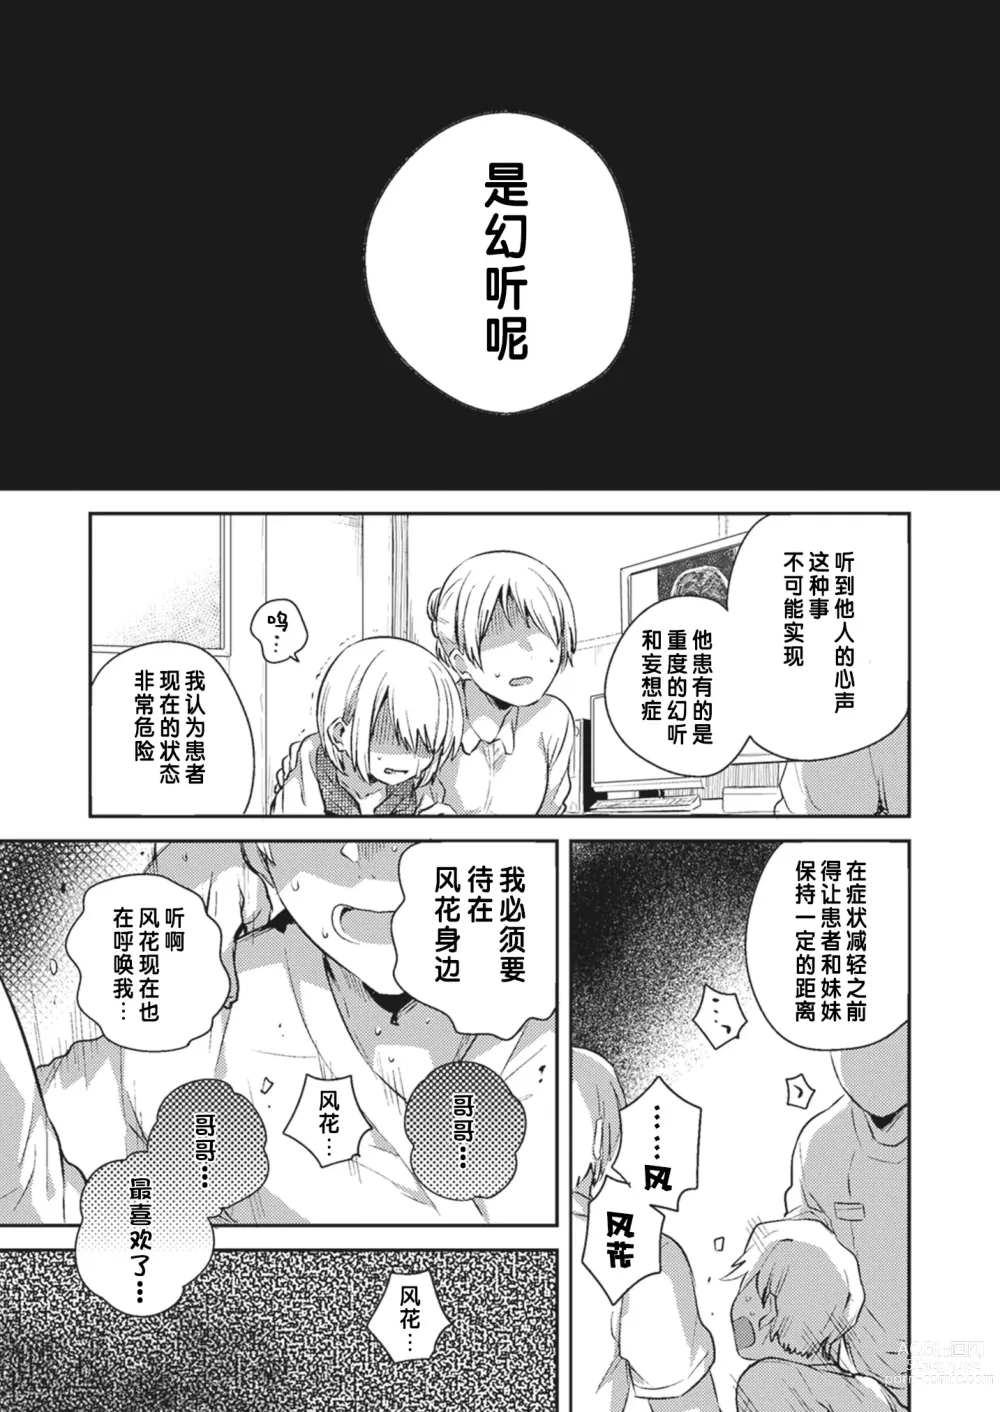 Page 16 of doujinshi 能听见妹妹的心声